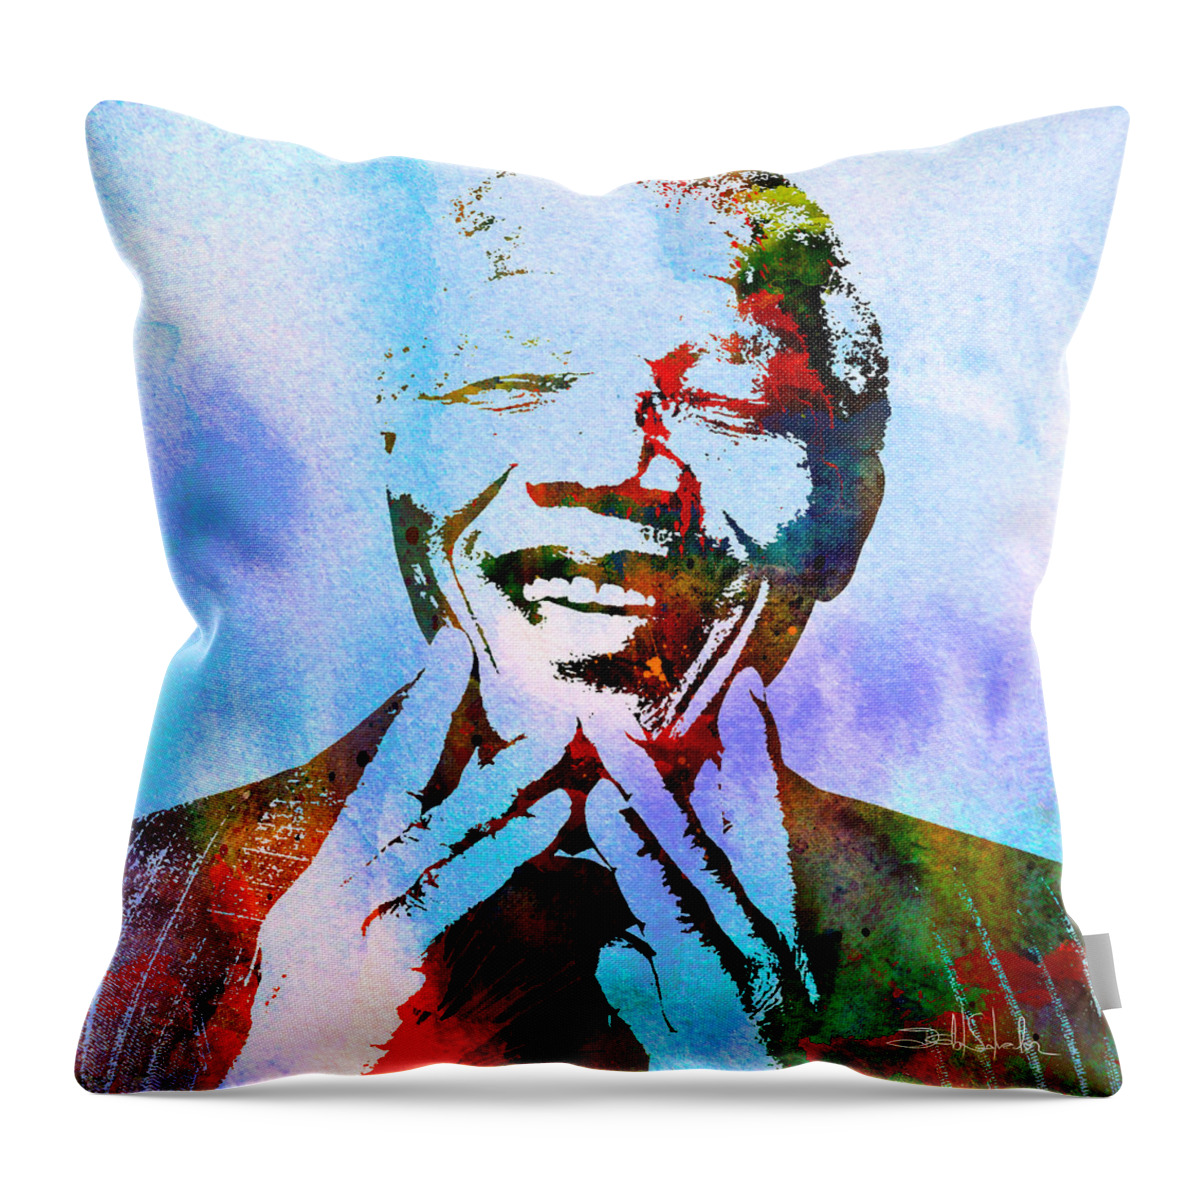 Digital Art Throw Pillow featuring the digital art Madiba by Isabel Salvador